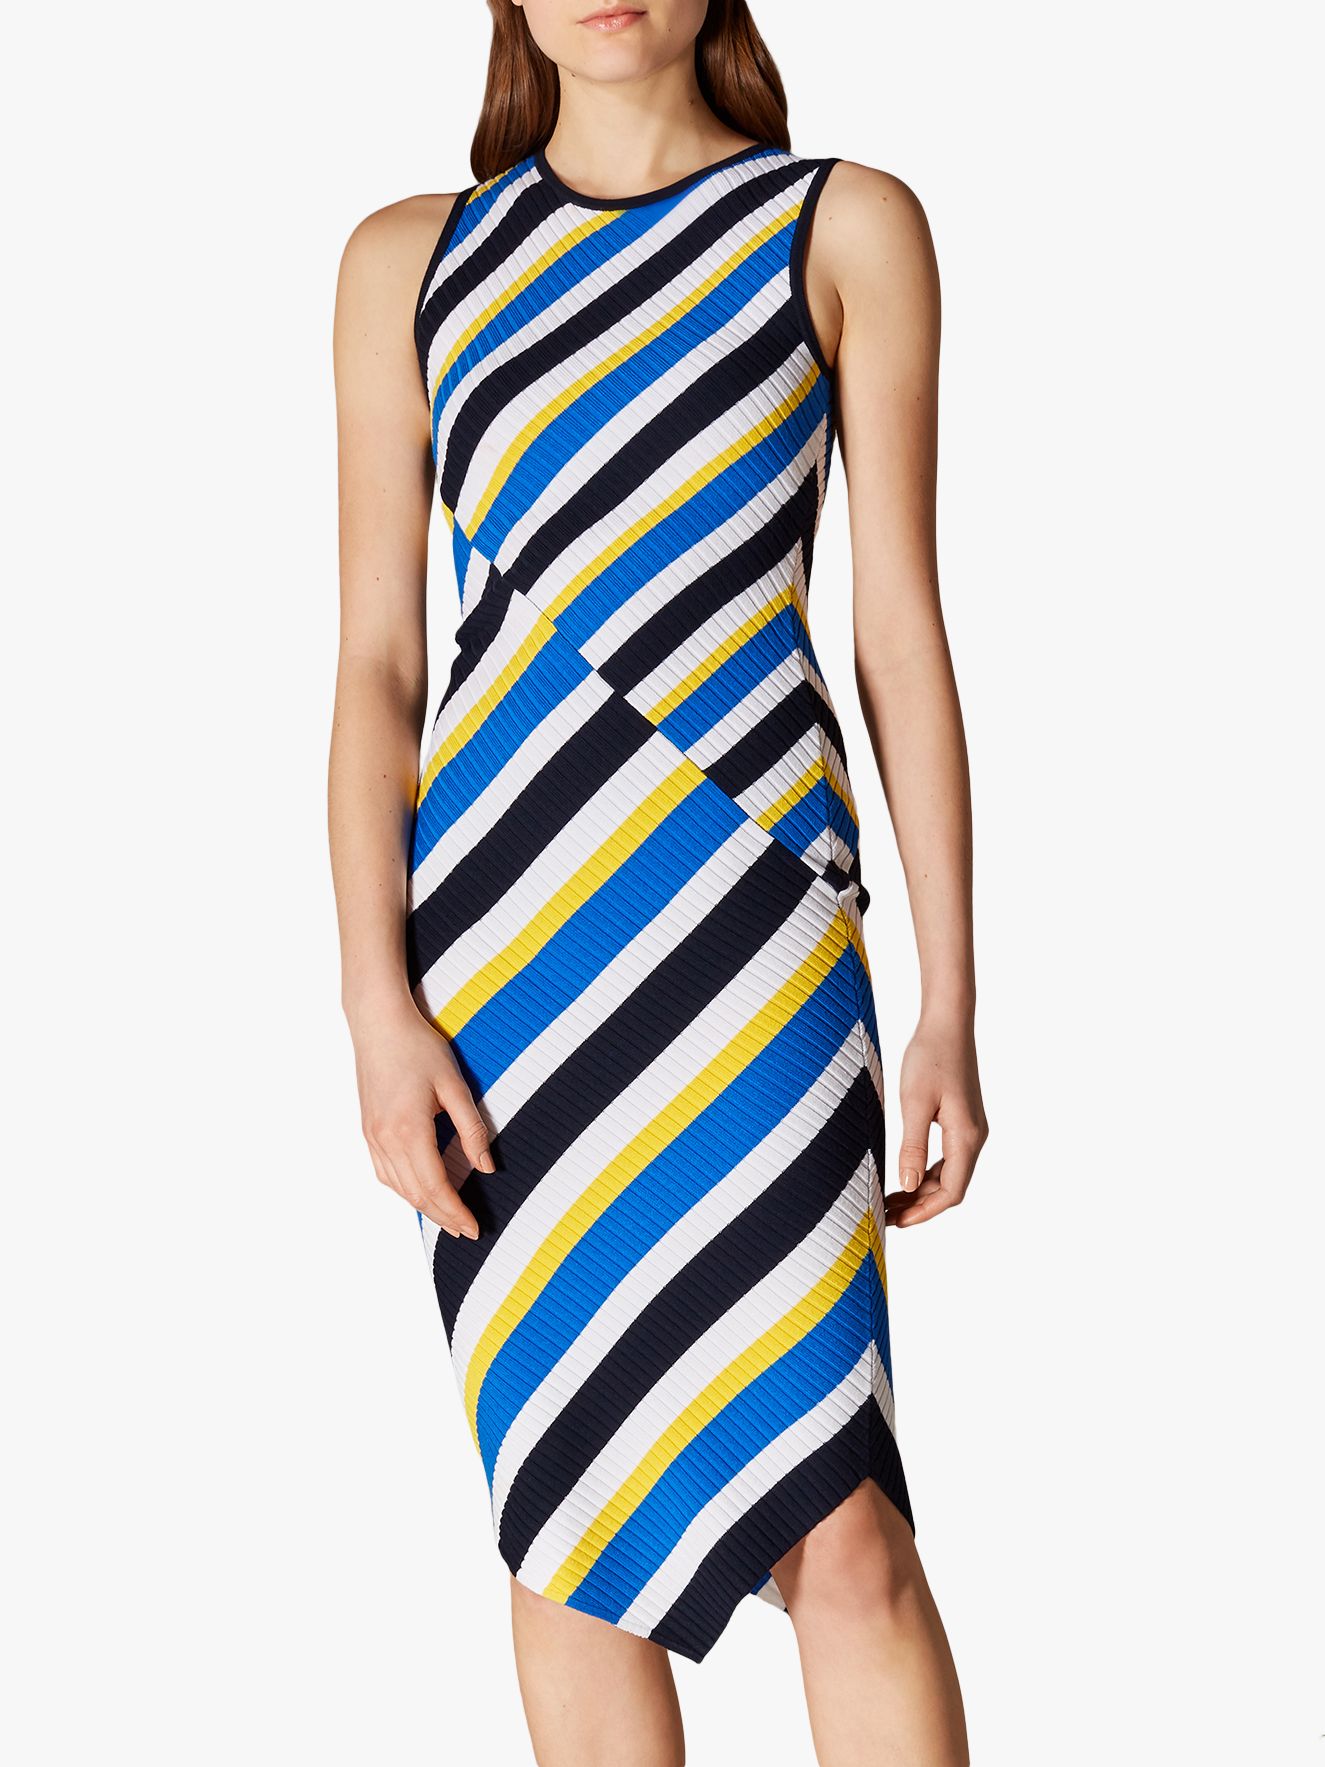 Karen Millen Striped Bodycon Dress, Multi at John Lewis & Partners